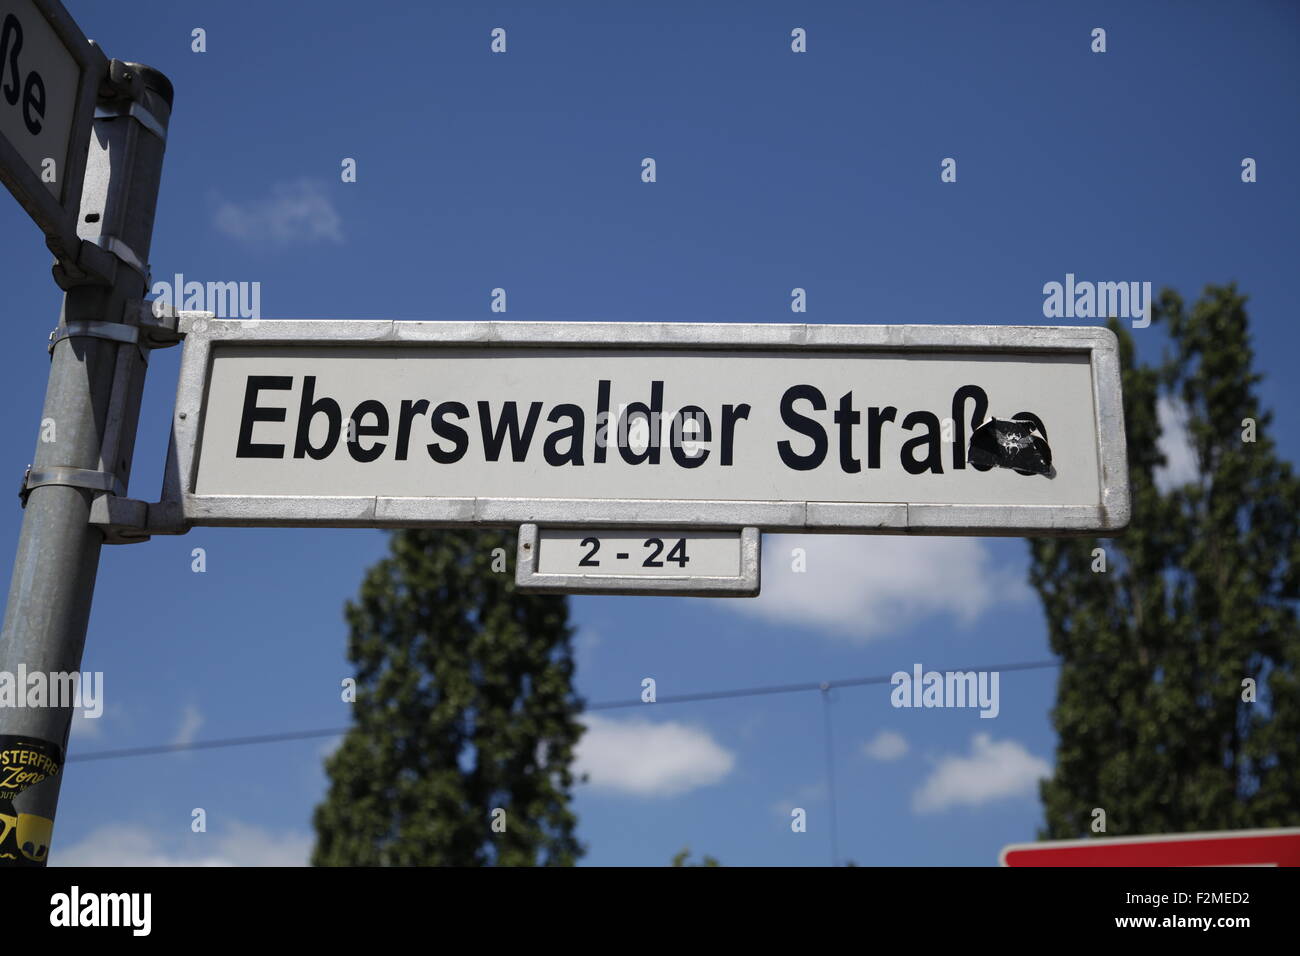 Eberswalder Street road sign in Berlin Prenzlauer Berg Stock Photo